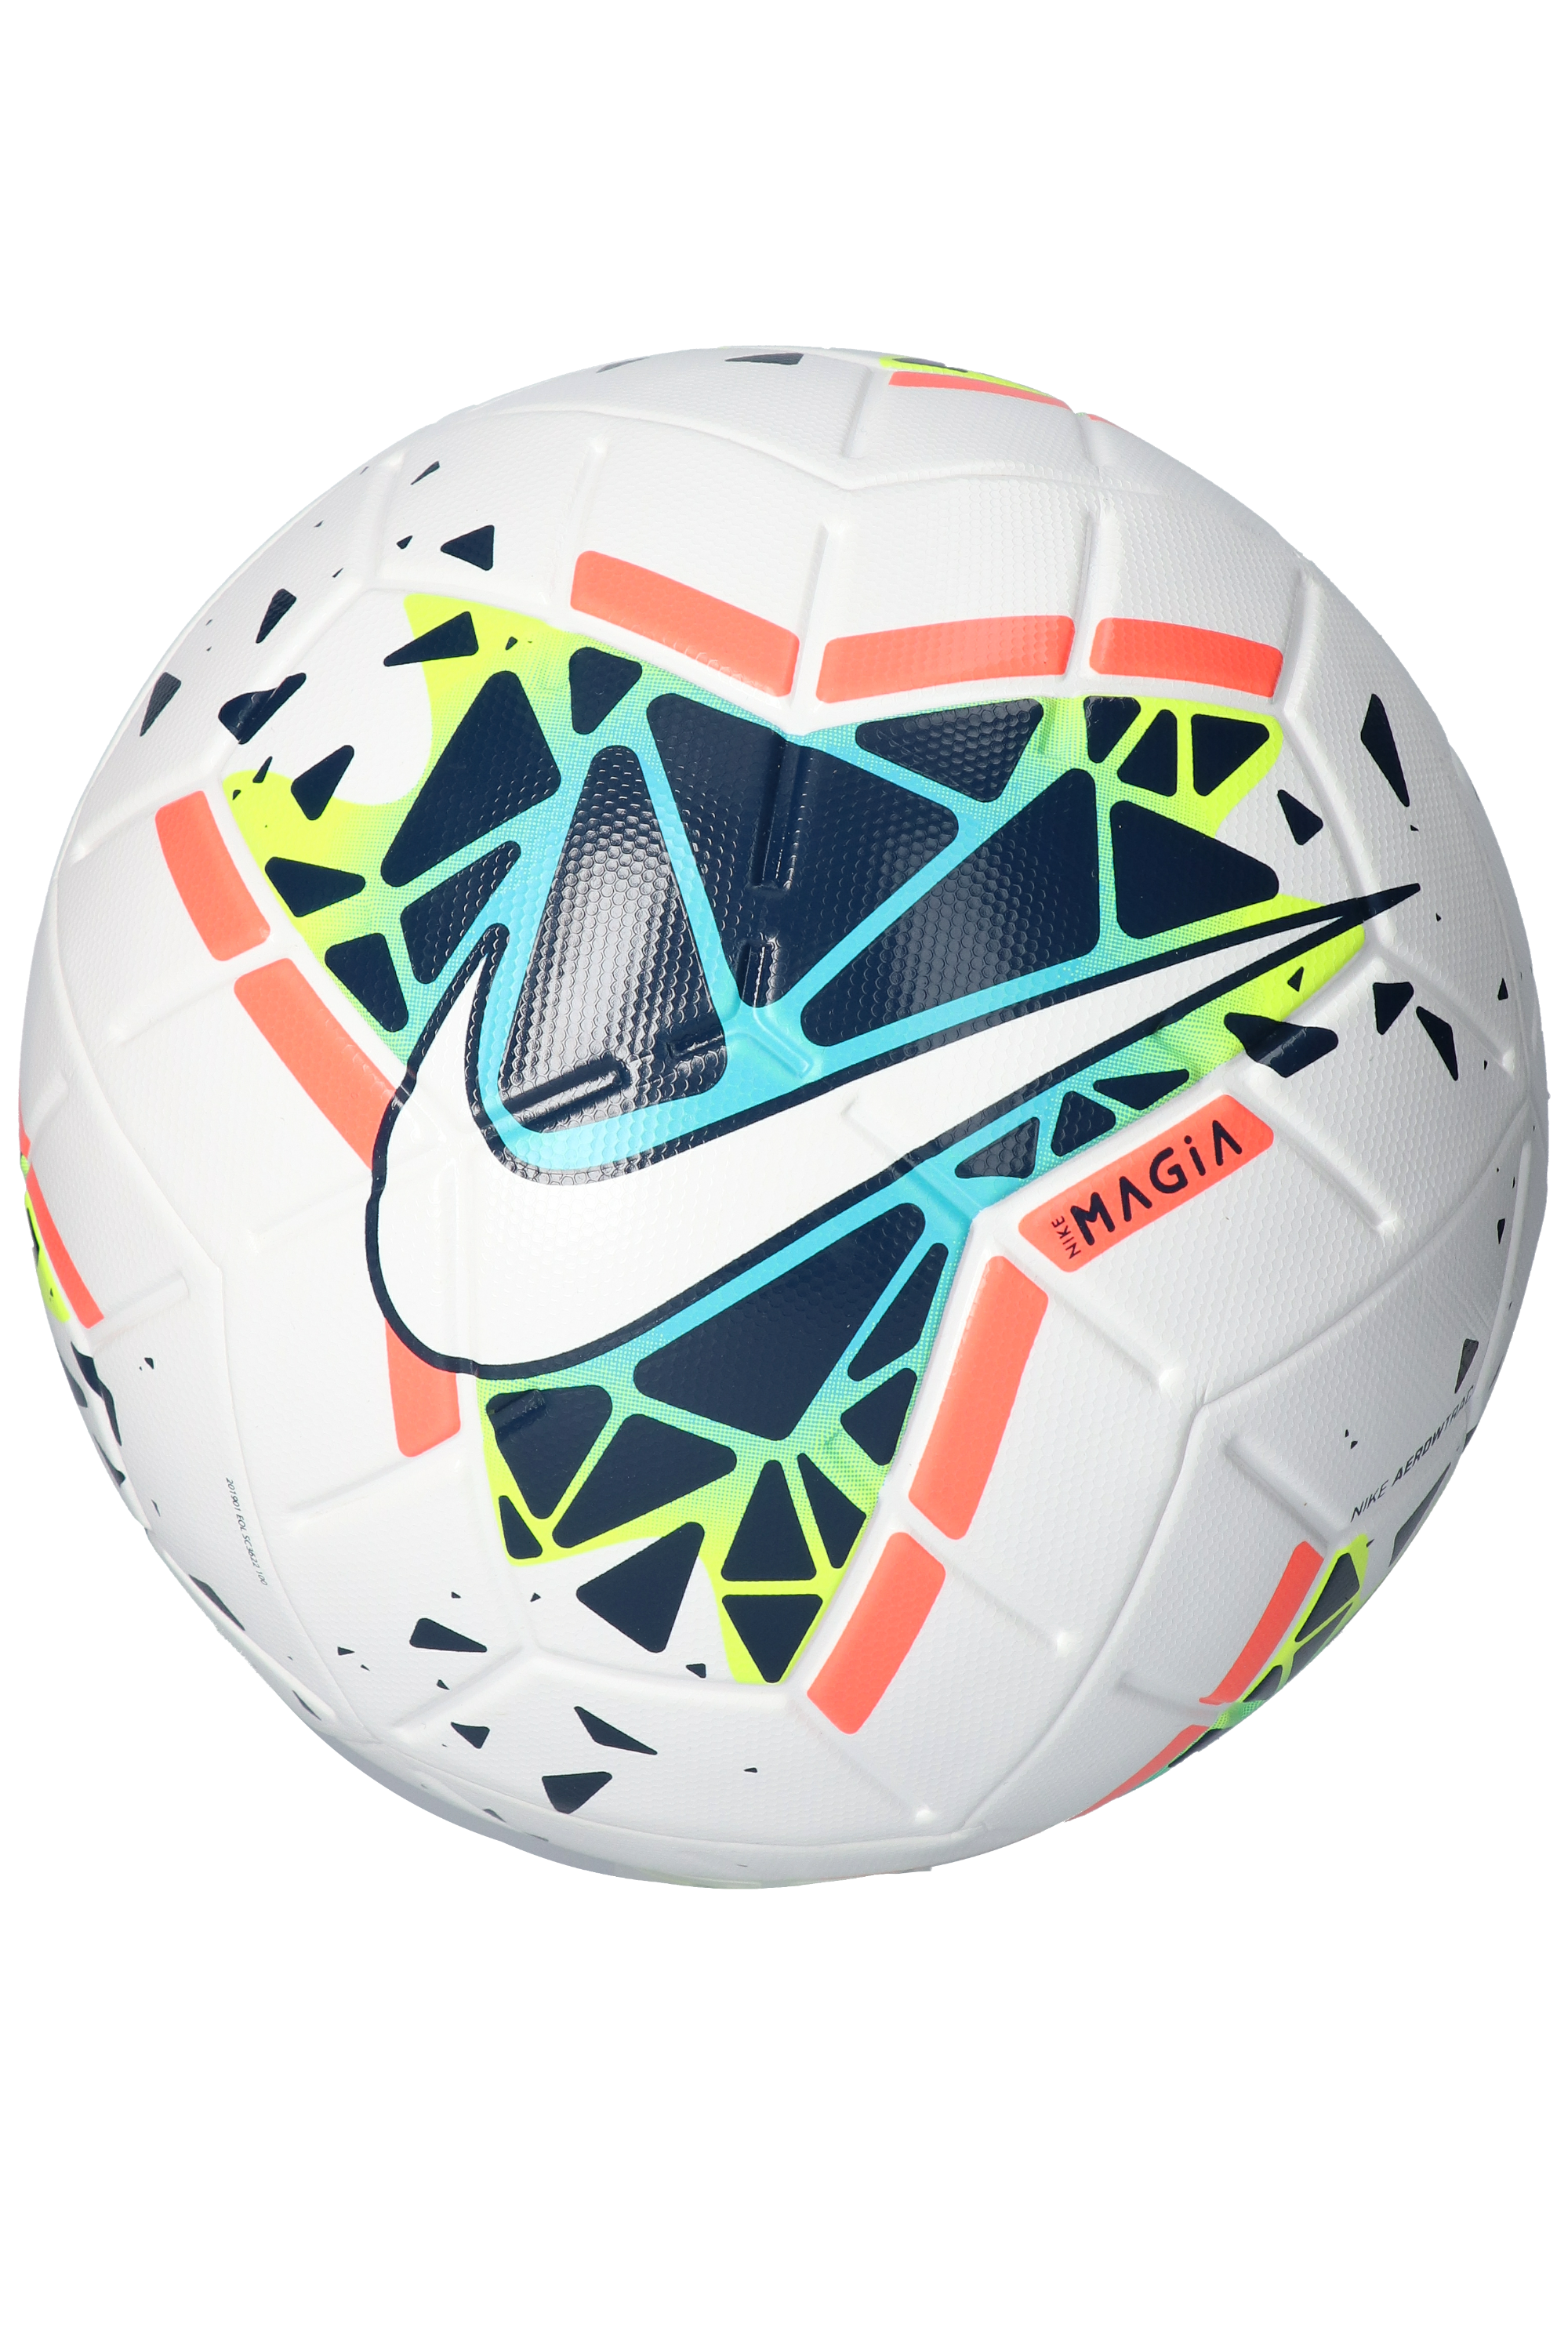 Ball Nike Magia size 5 | R-GOL.com - Football boots \u0026 equipment